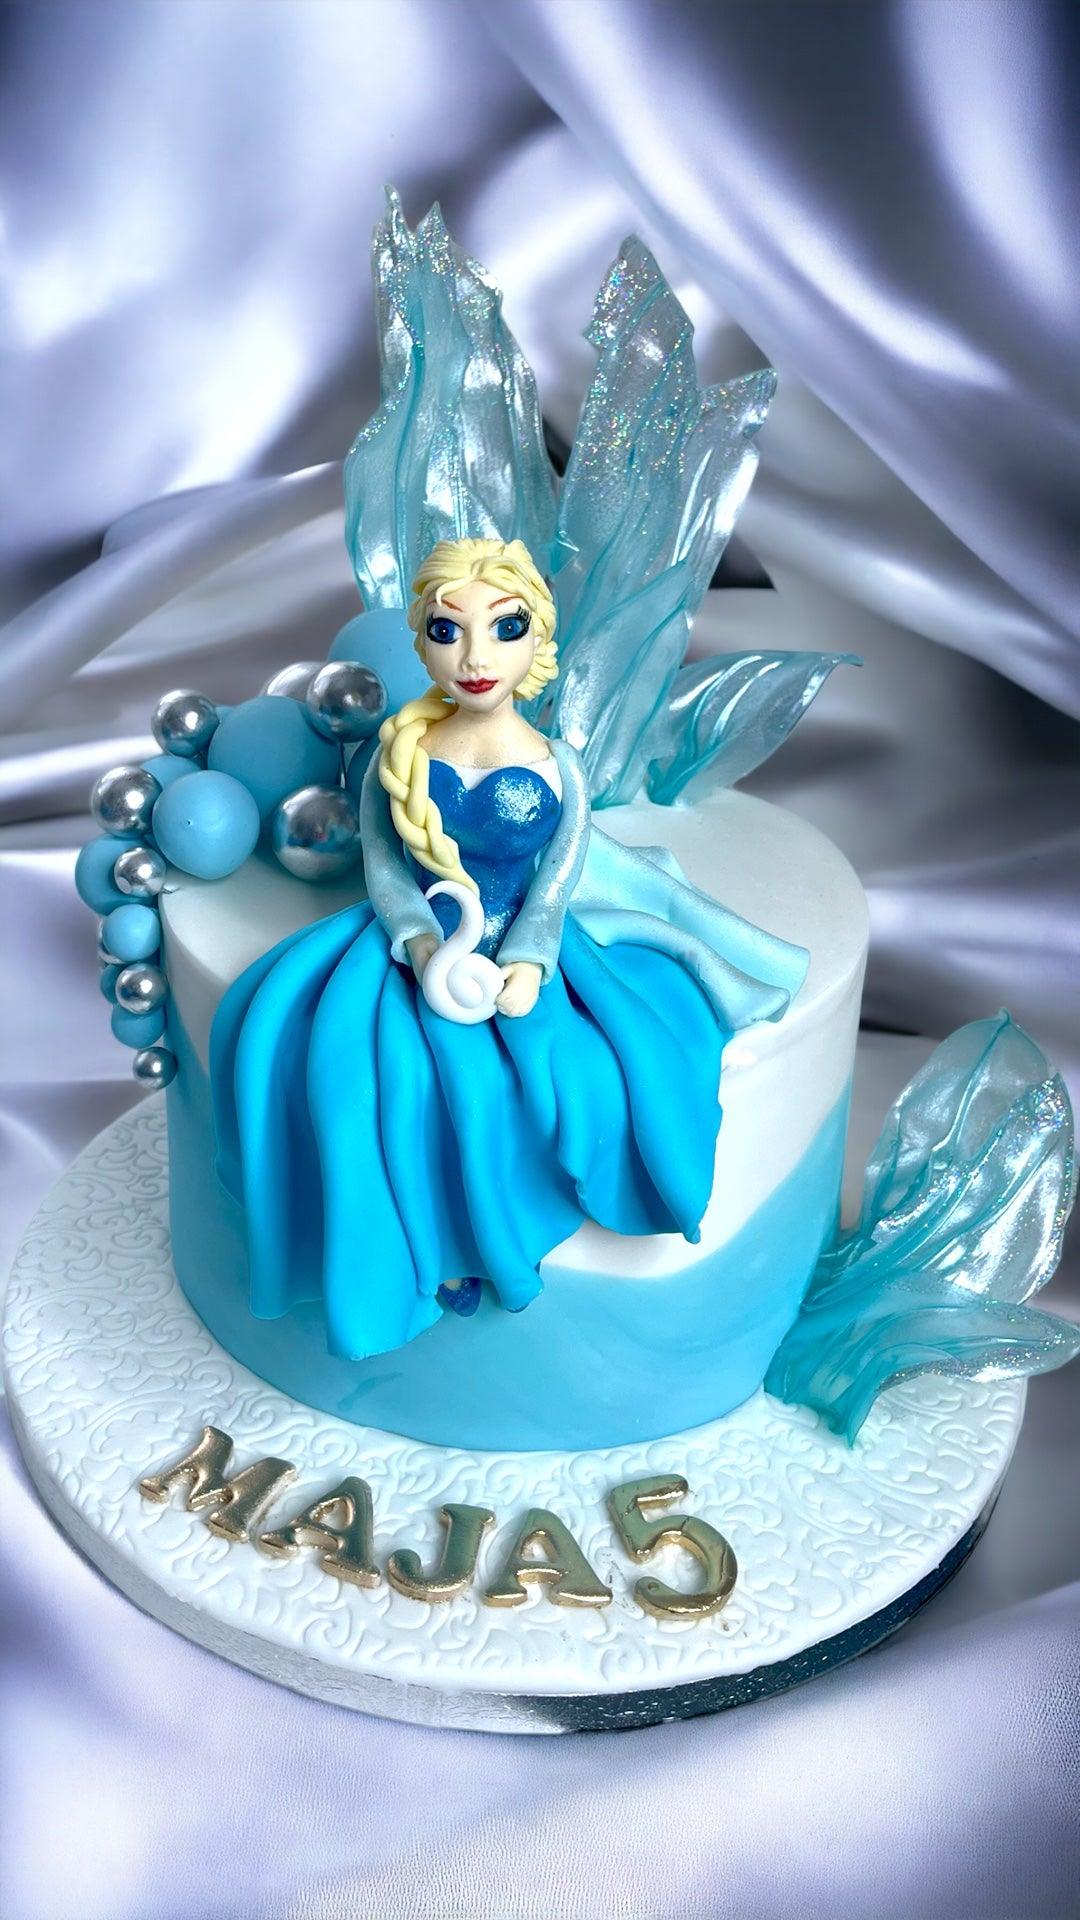 Disney Frozen birthday cake - Naturally_deliciousss